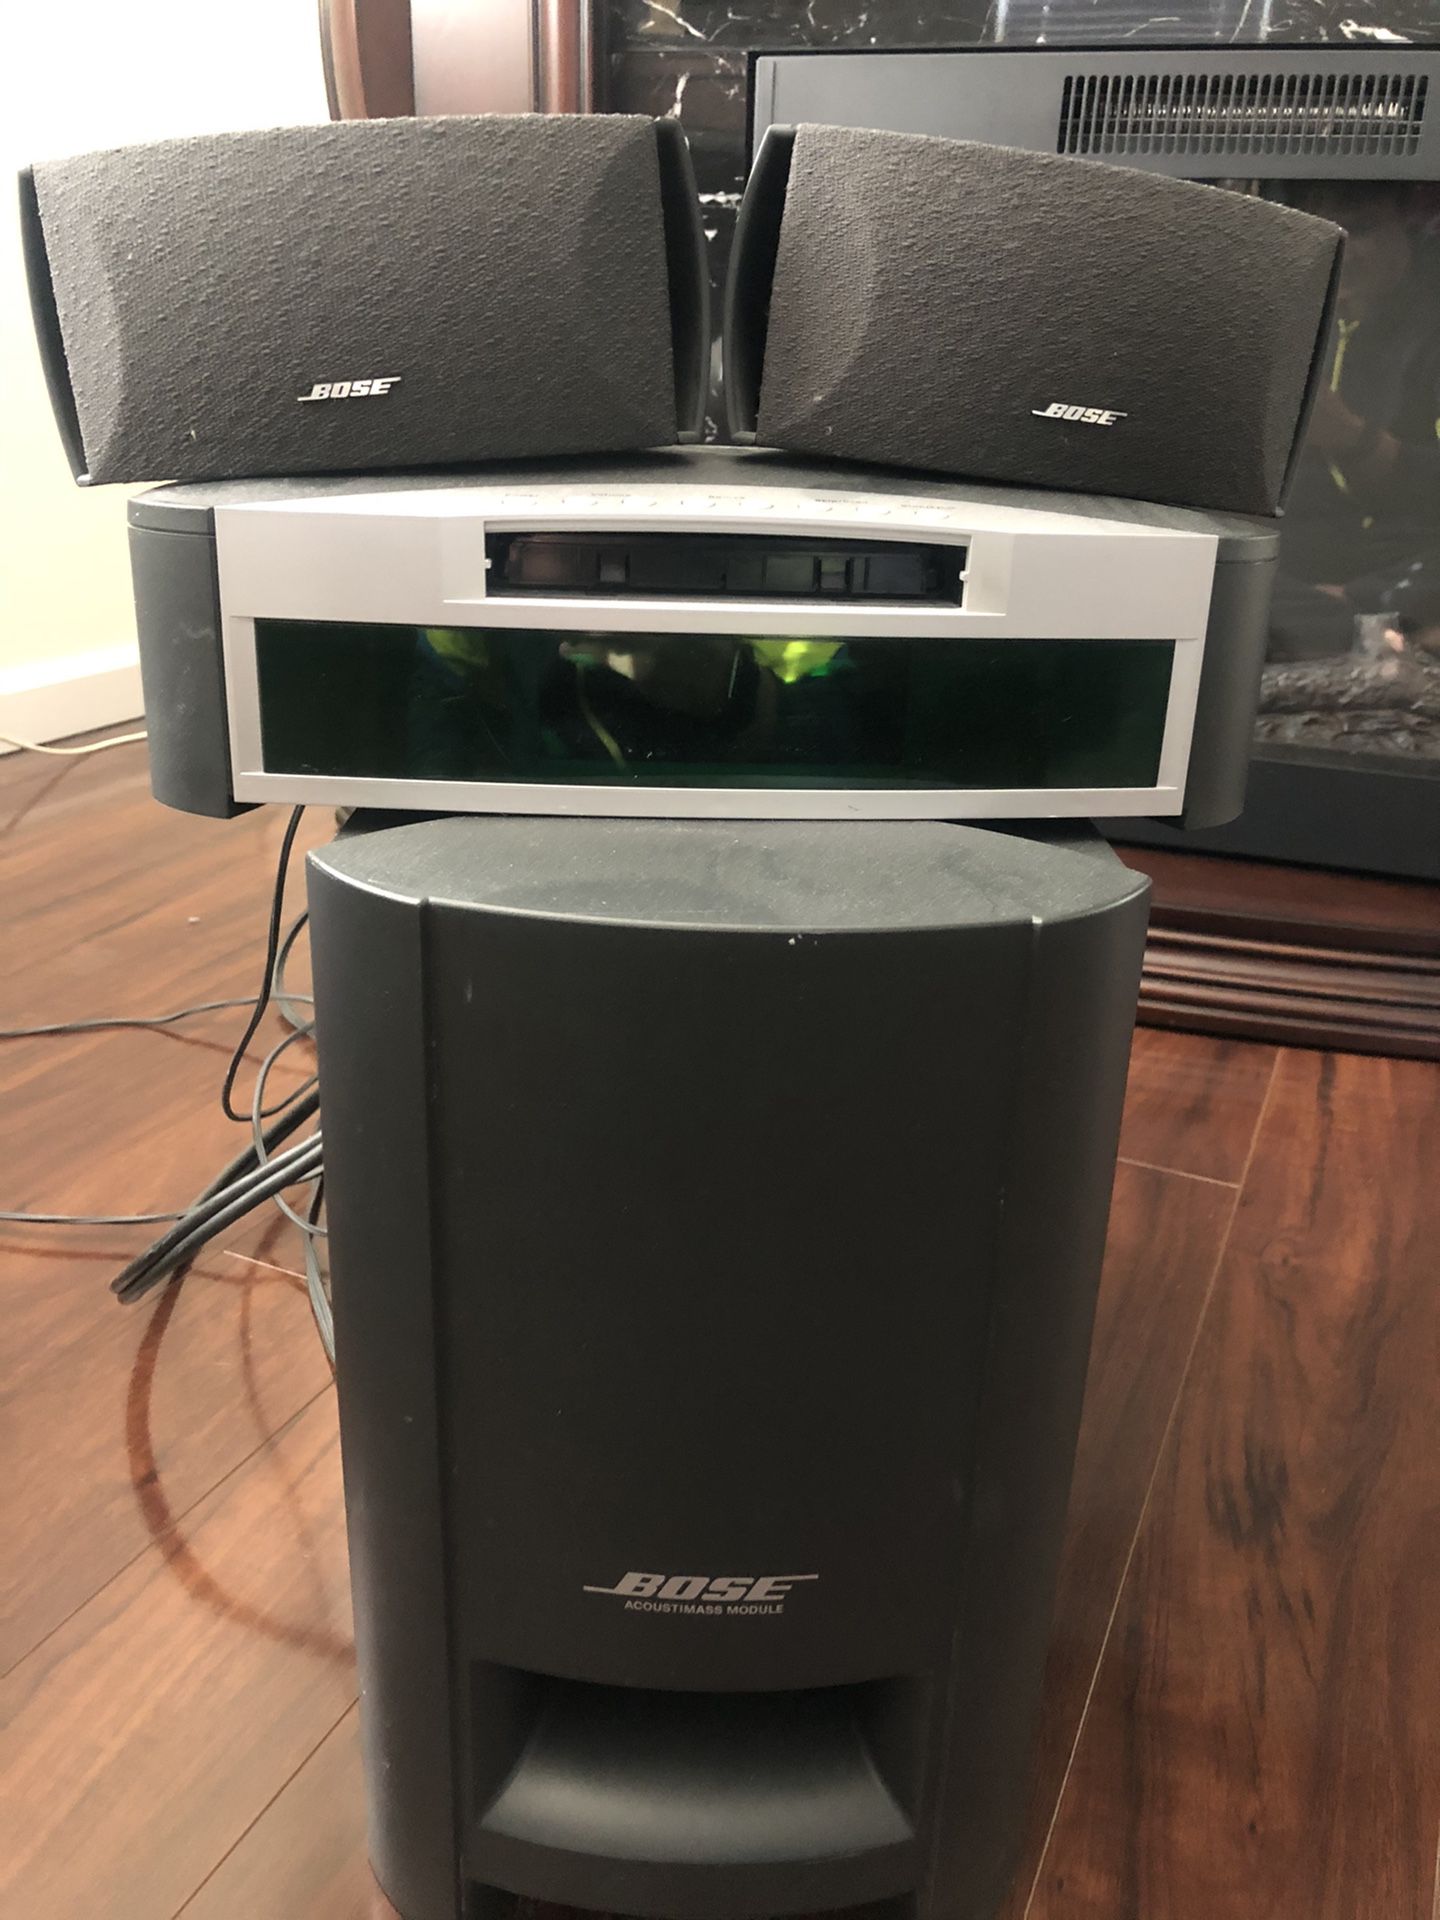 Bose stereo